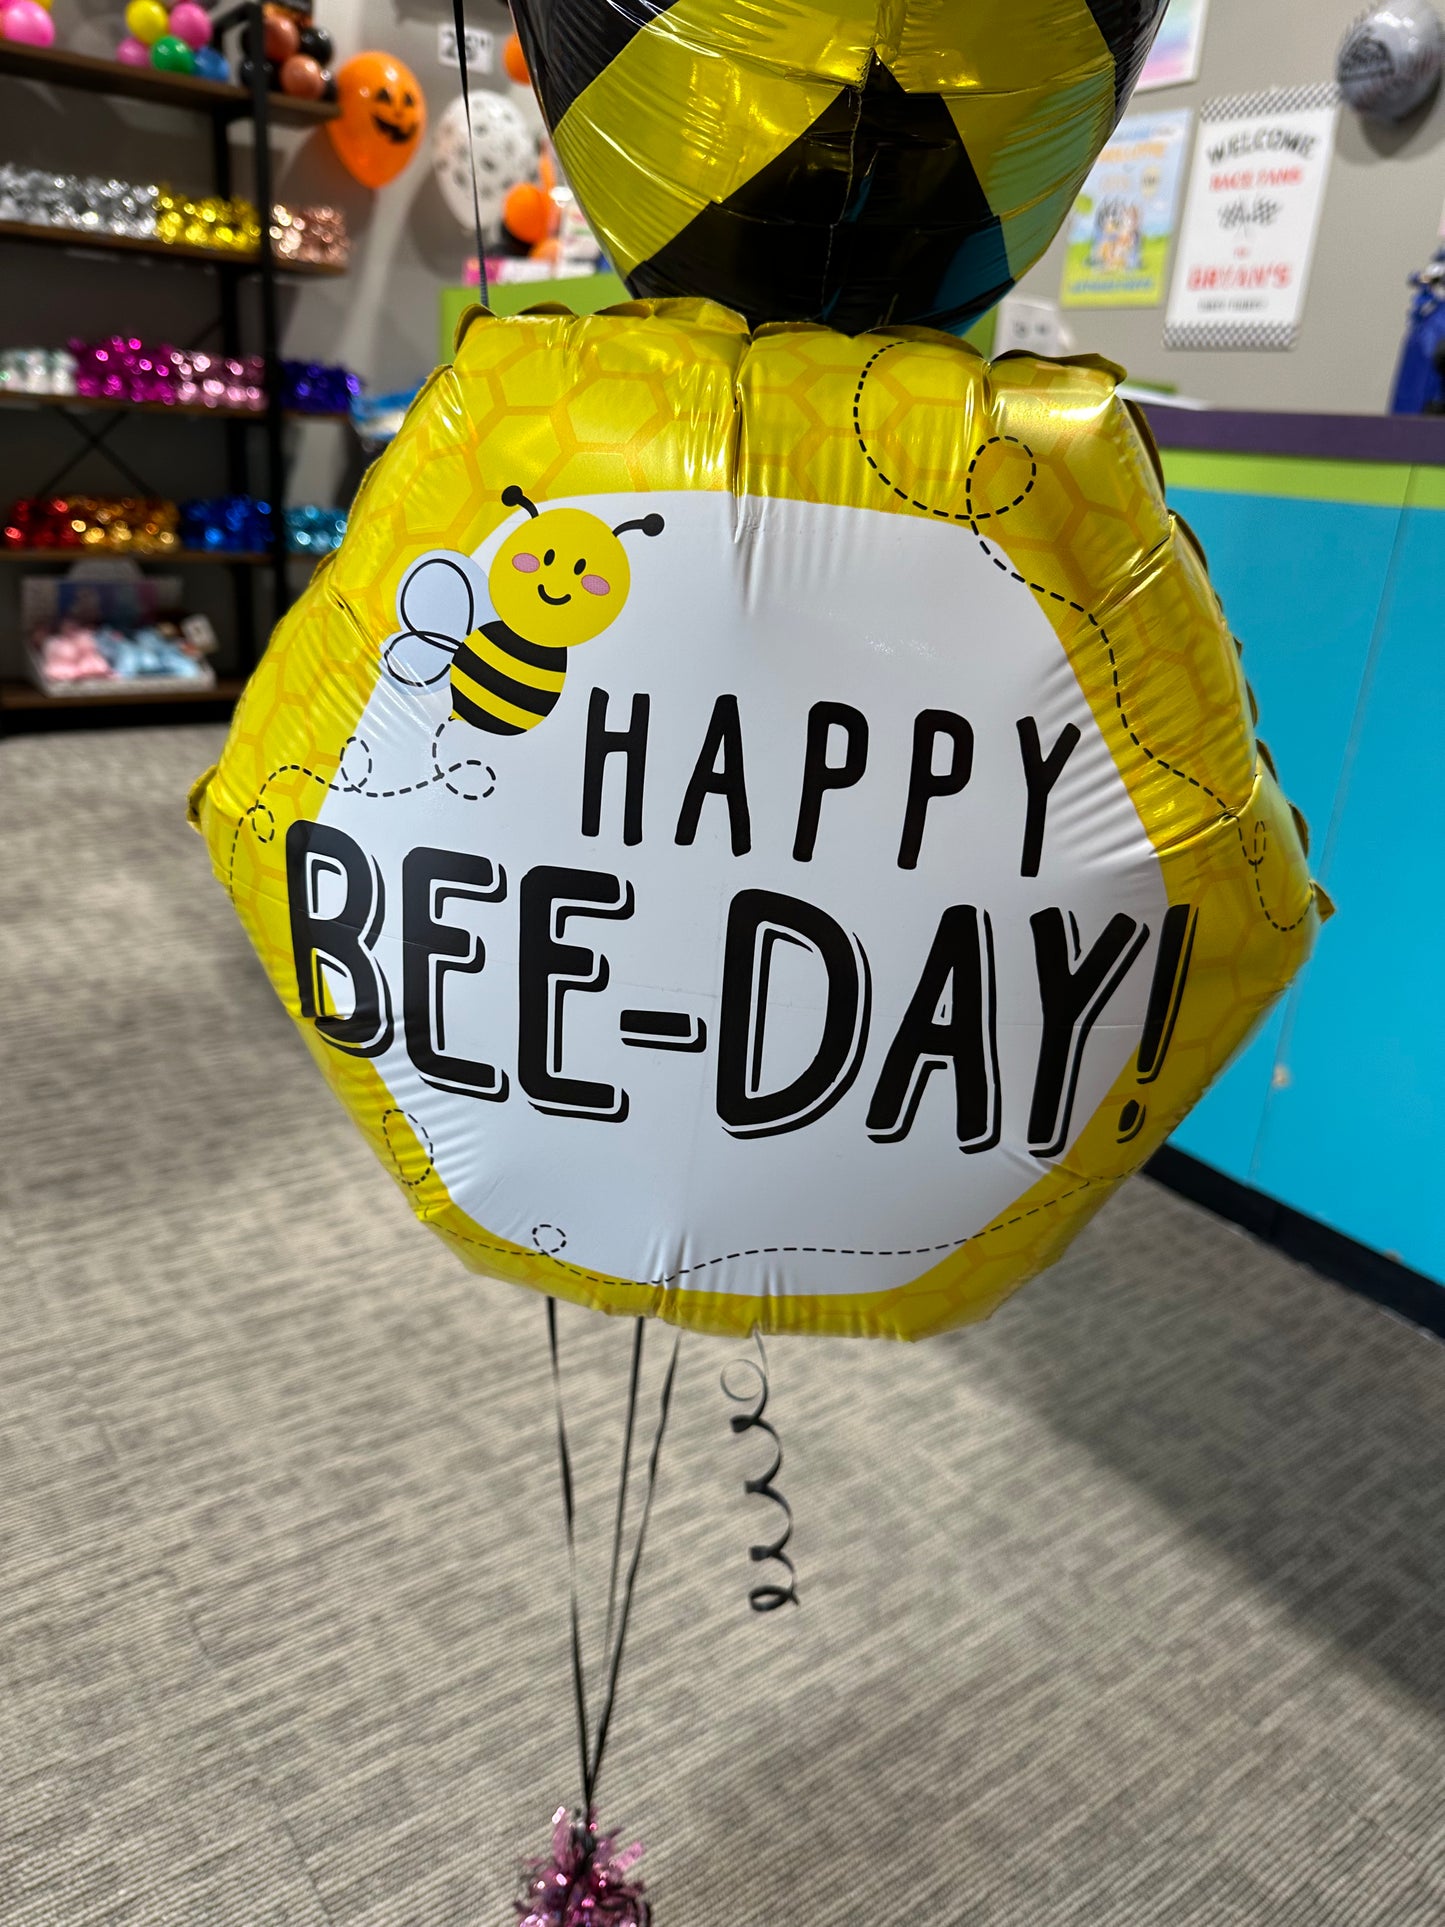 Happy Bee-Day